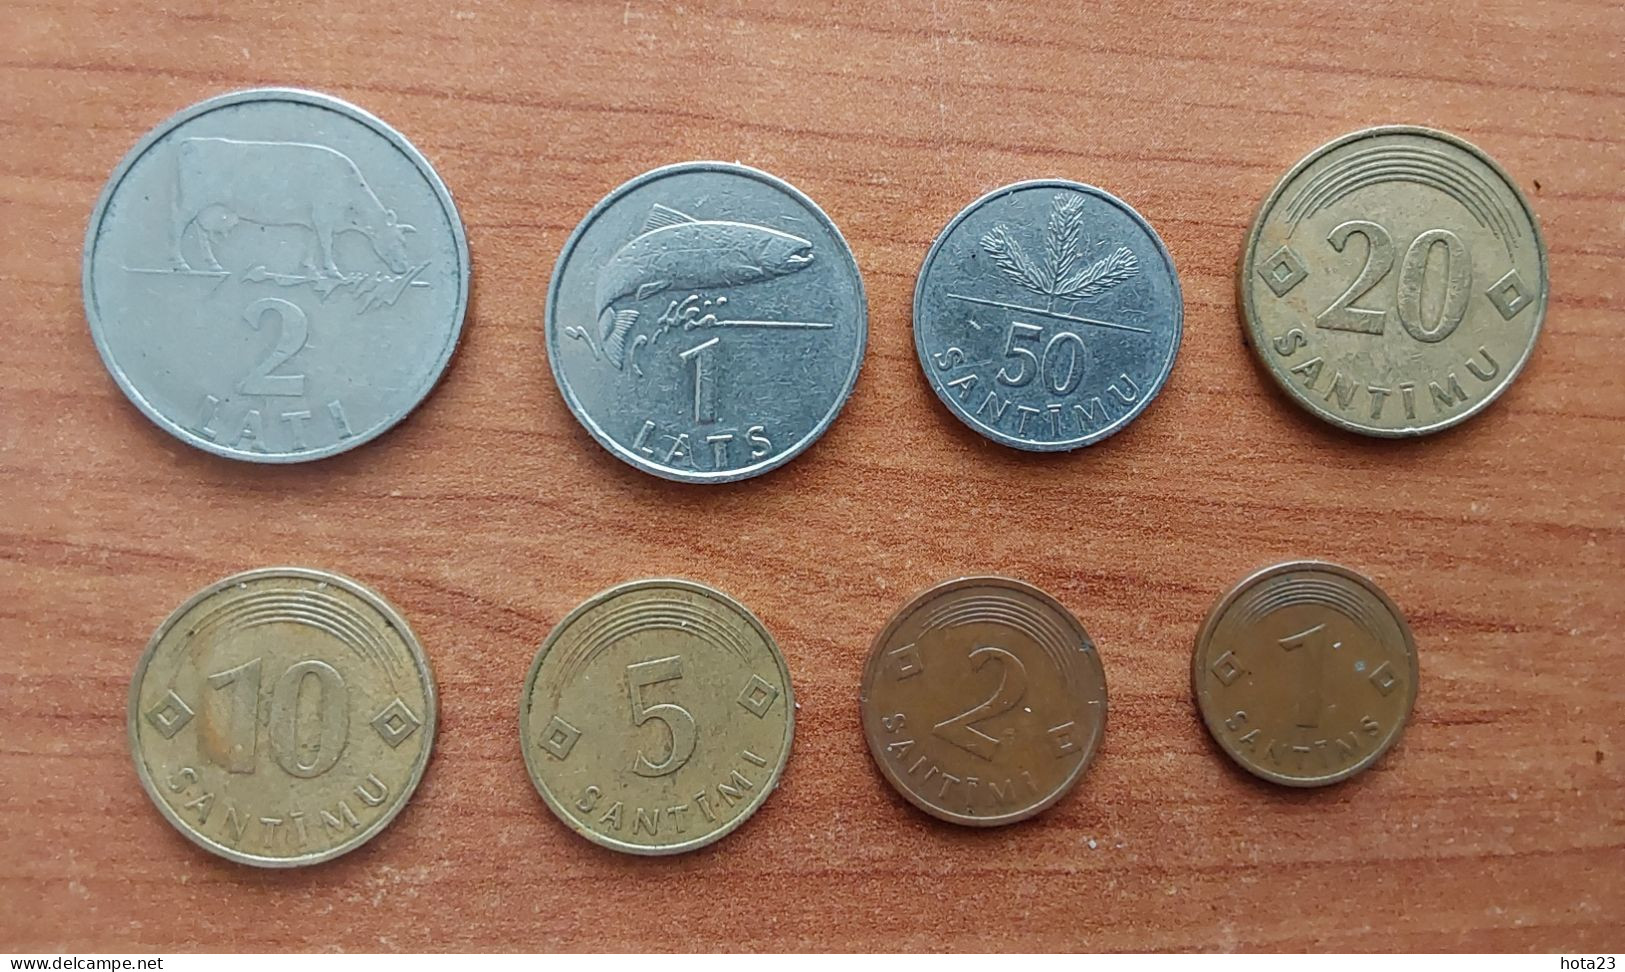 1992 MUCCA COW LATVIA 1 Santims - 2 Lats / Lat COIN RARE First Coins Full Set - Latvia